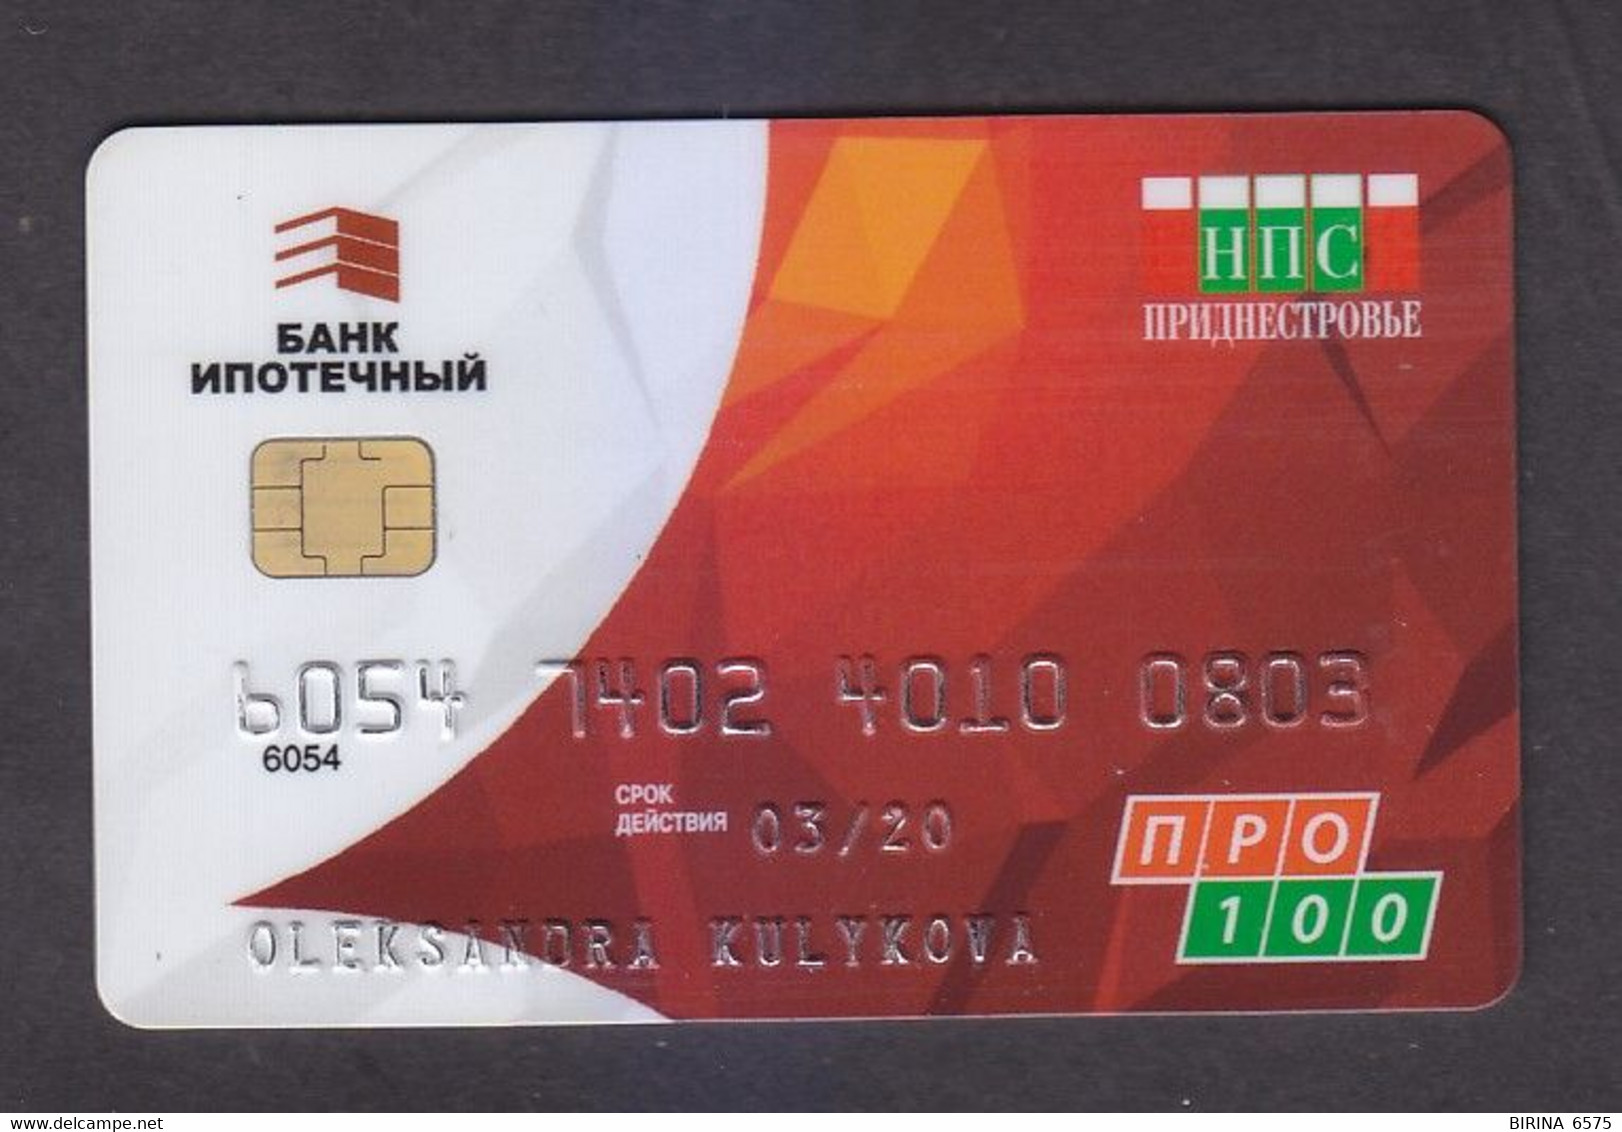 BANK CARD. IPOTECHNYIY BANK. MOLDOVA. TRANSNISTRIA. 2020. - 1-3 - Moldova